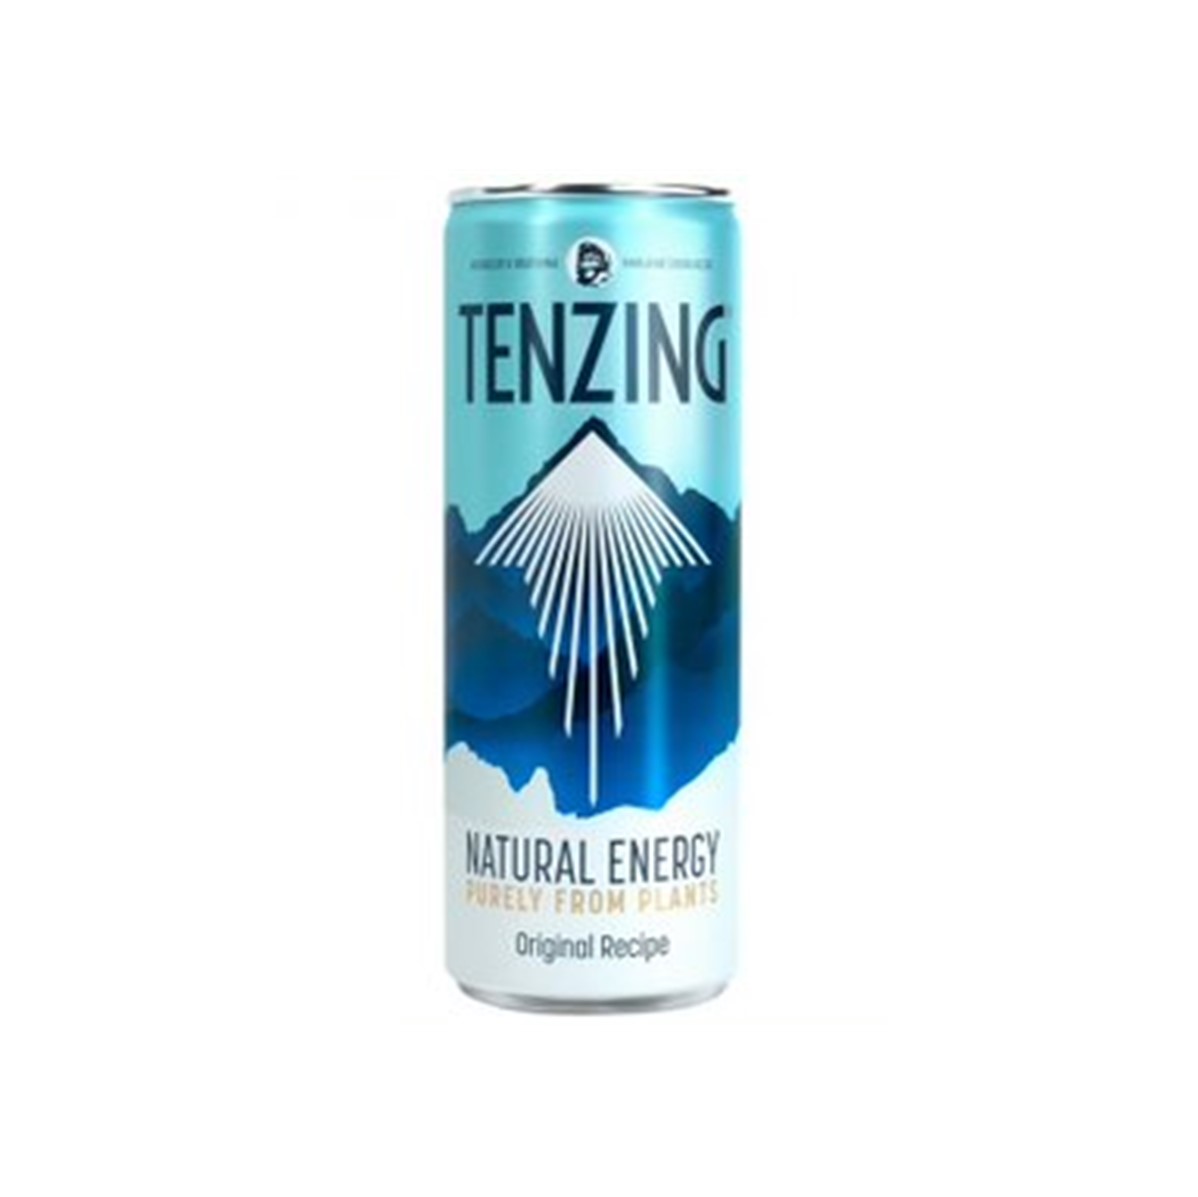 Tenzing Original - 24x250ml cans